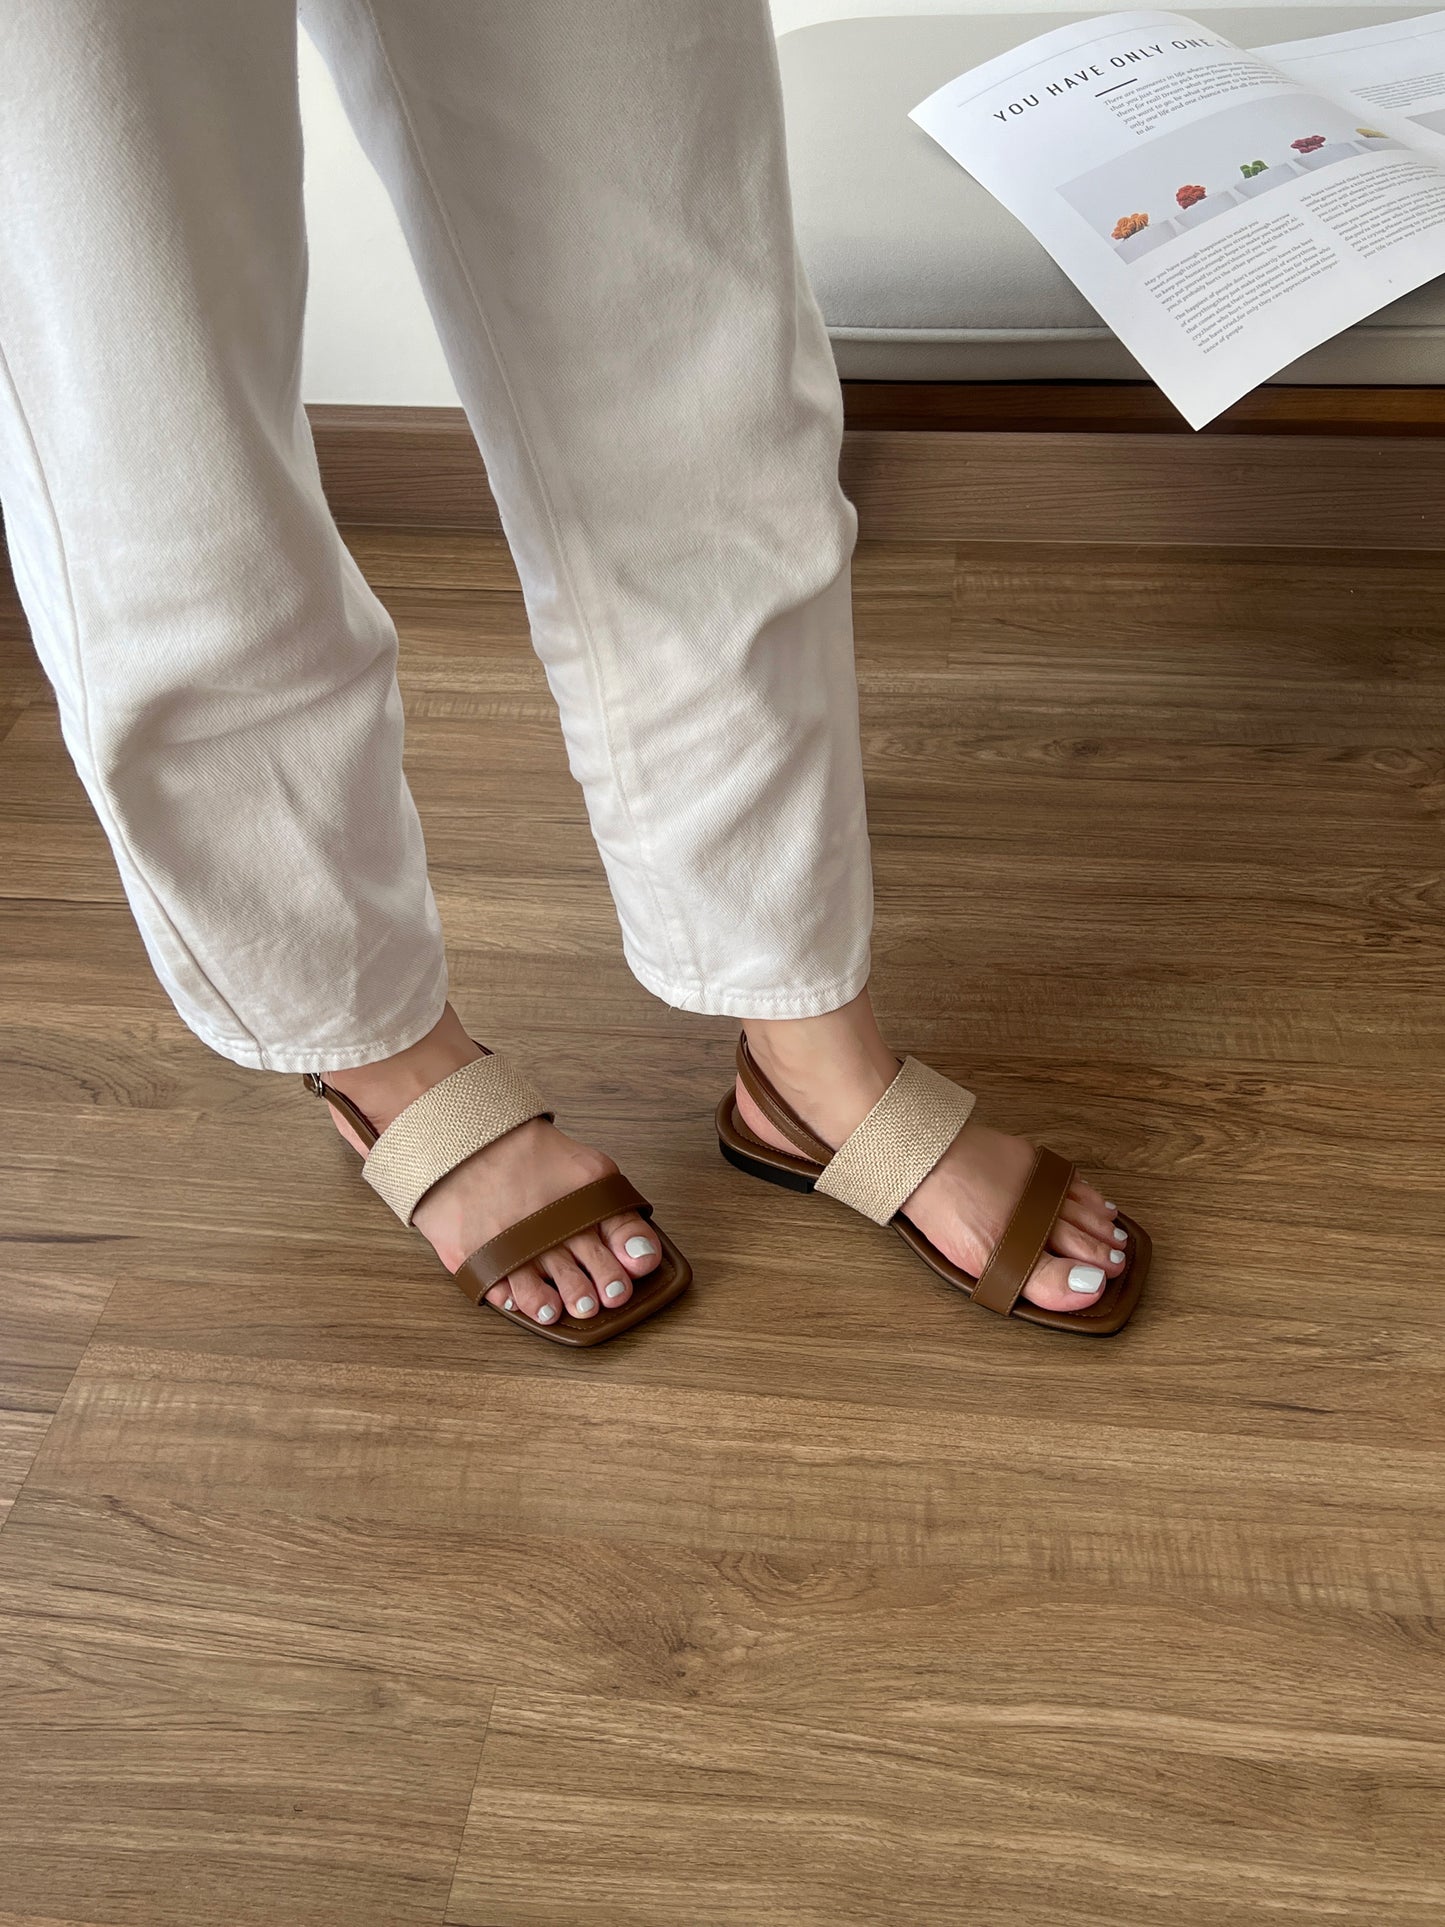 Tiara Roman Style Flat Sandals (Brown)